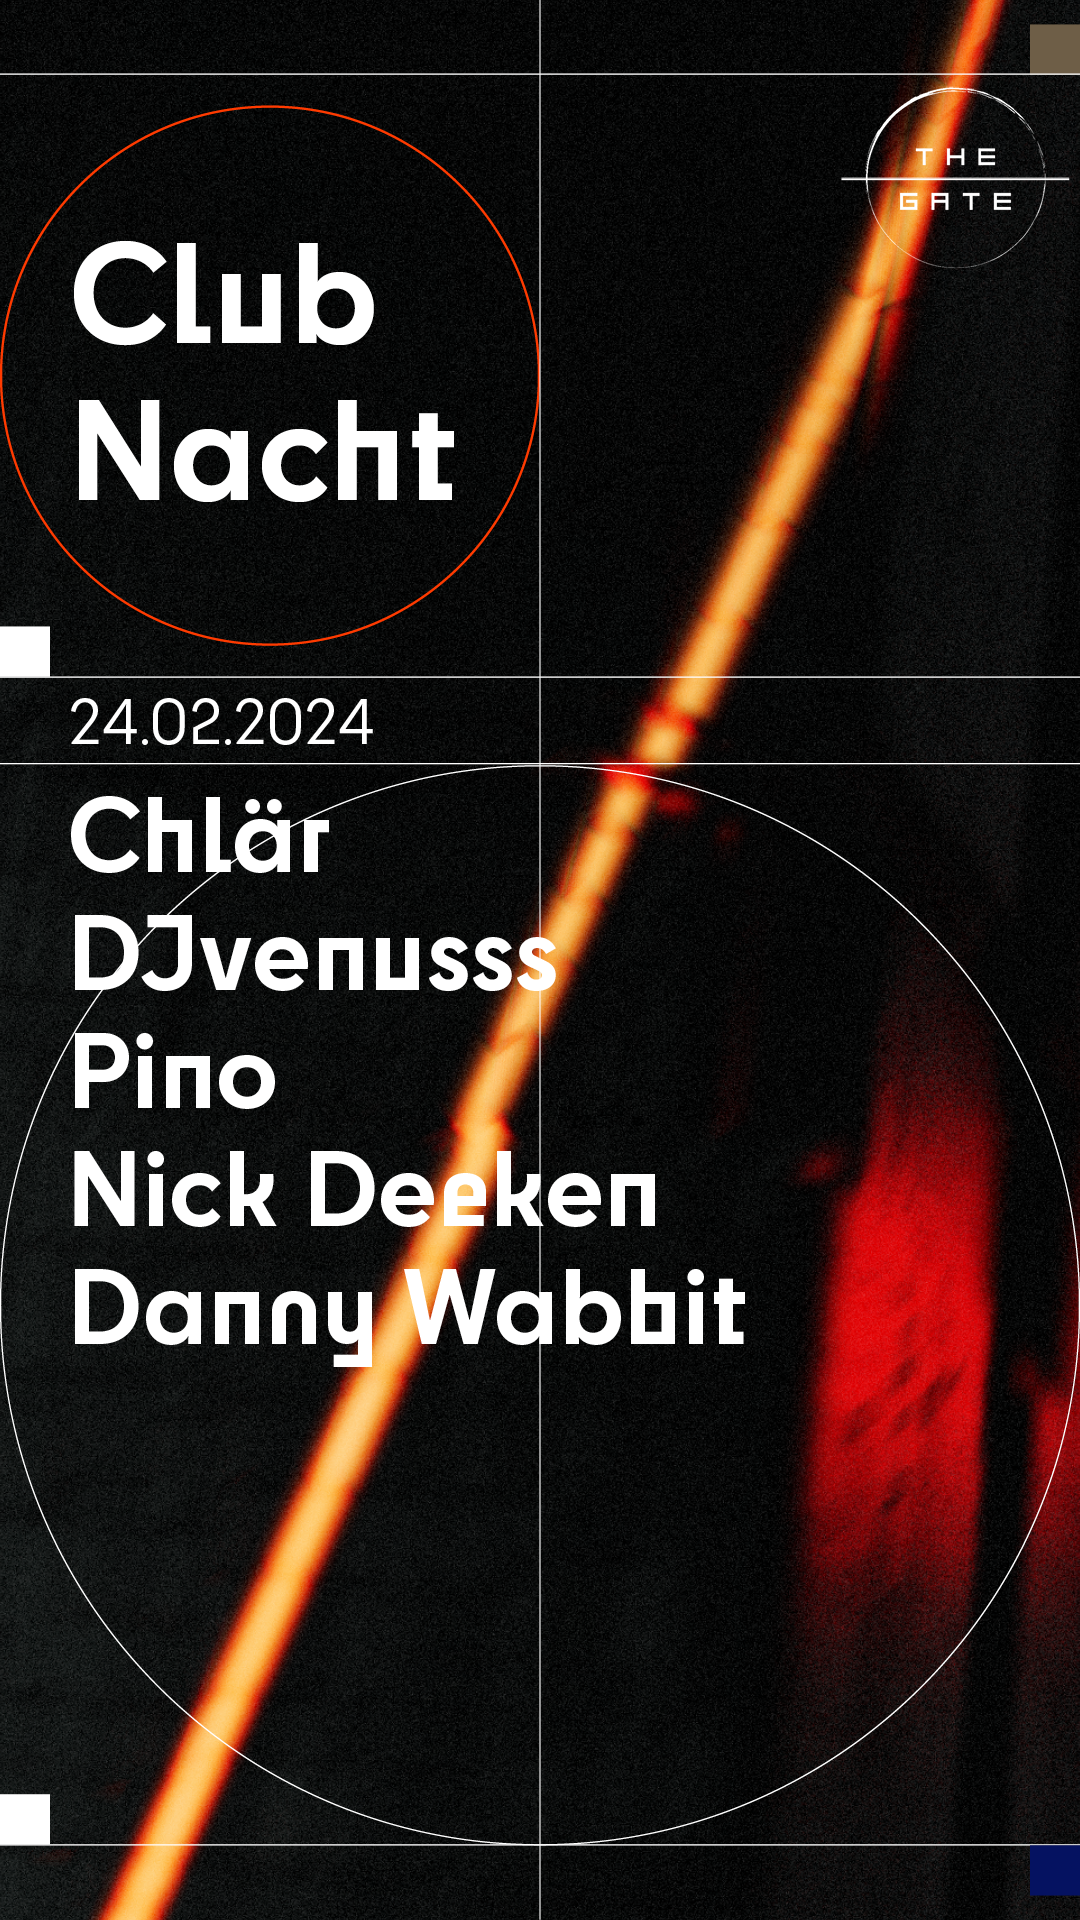 Club Nacht with Chlär Danny Wabbit DJ Venusss Pino NickDeeken - Página frontal